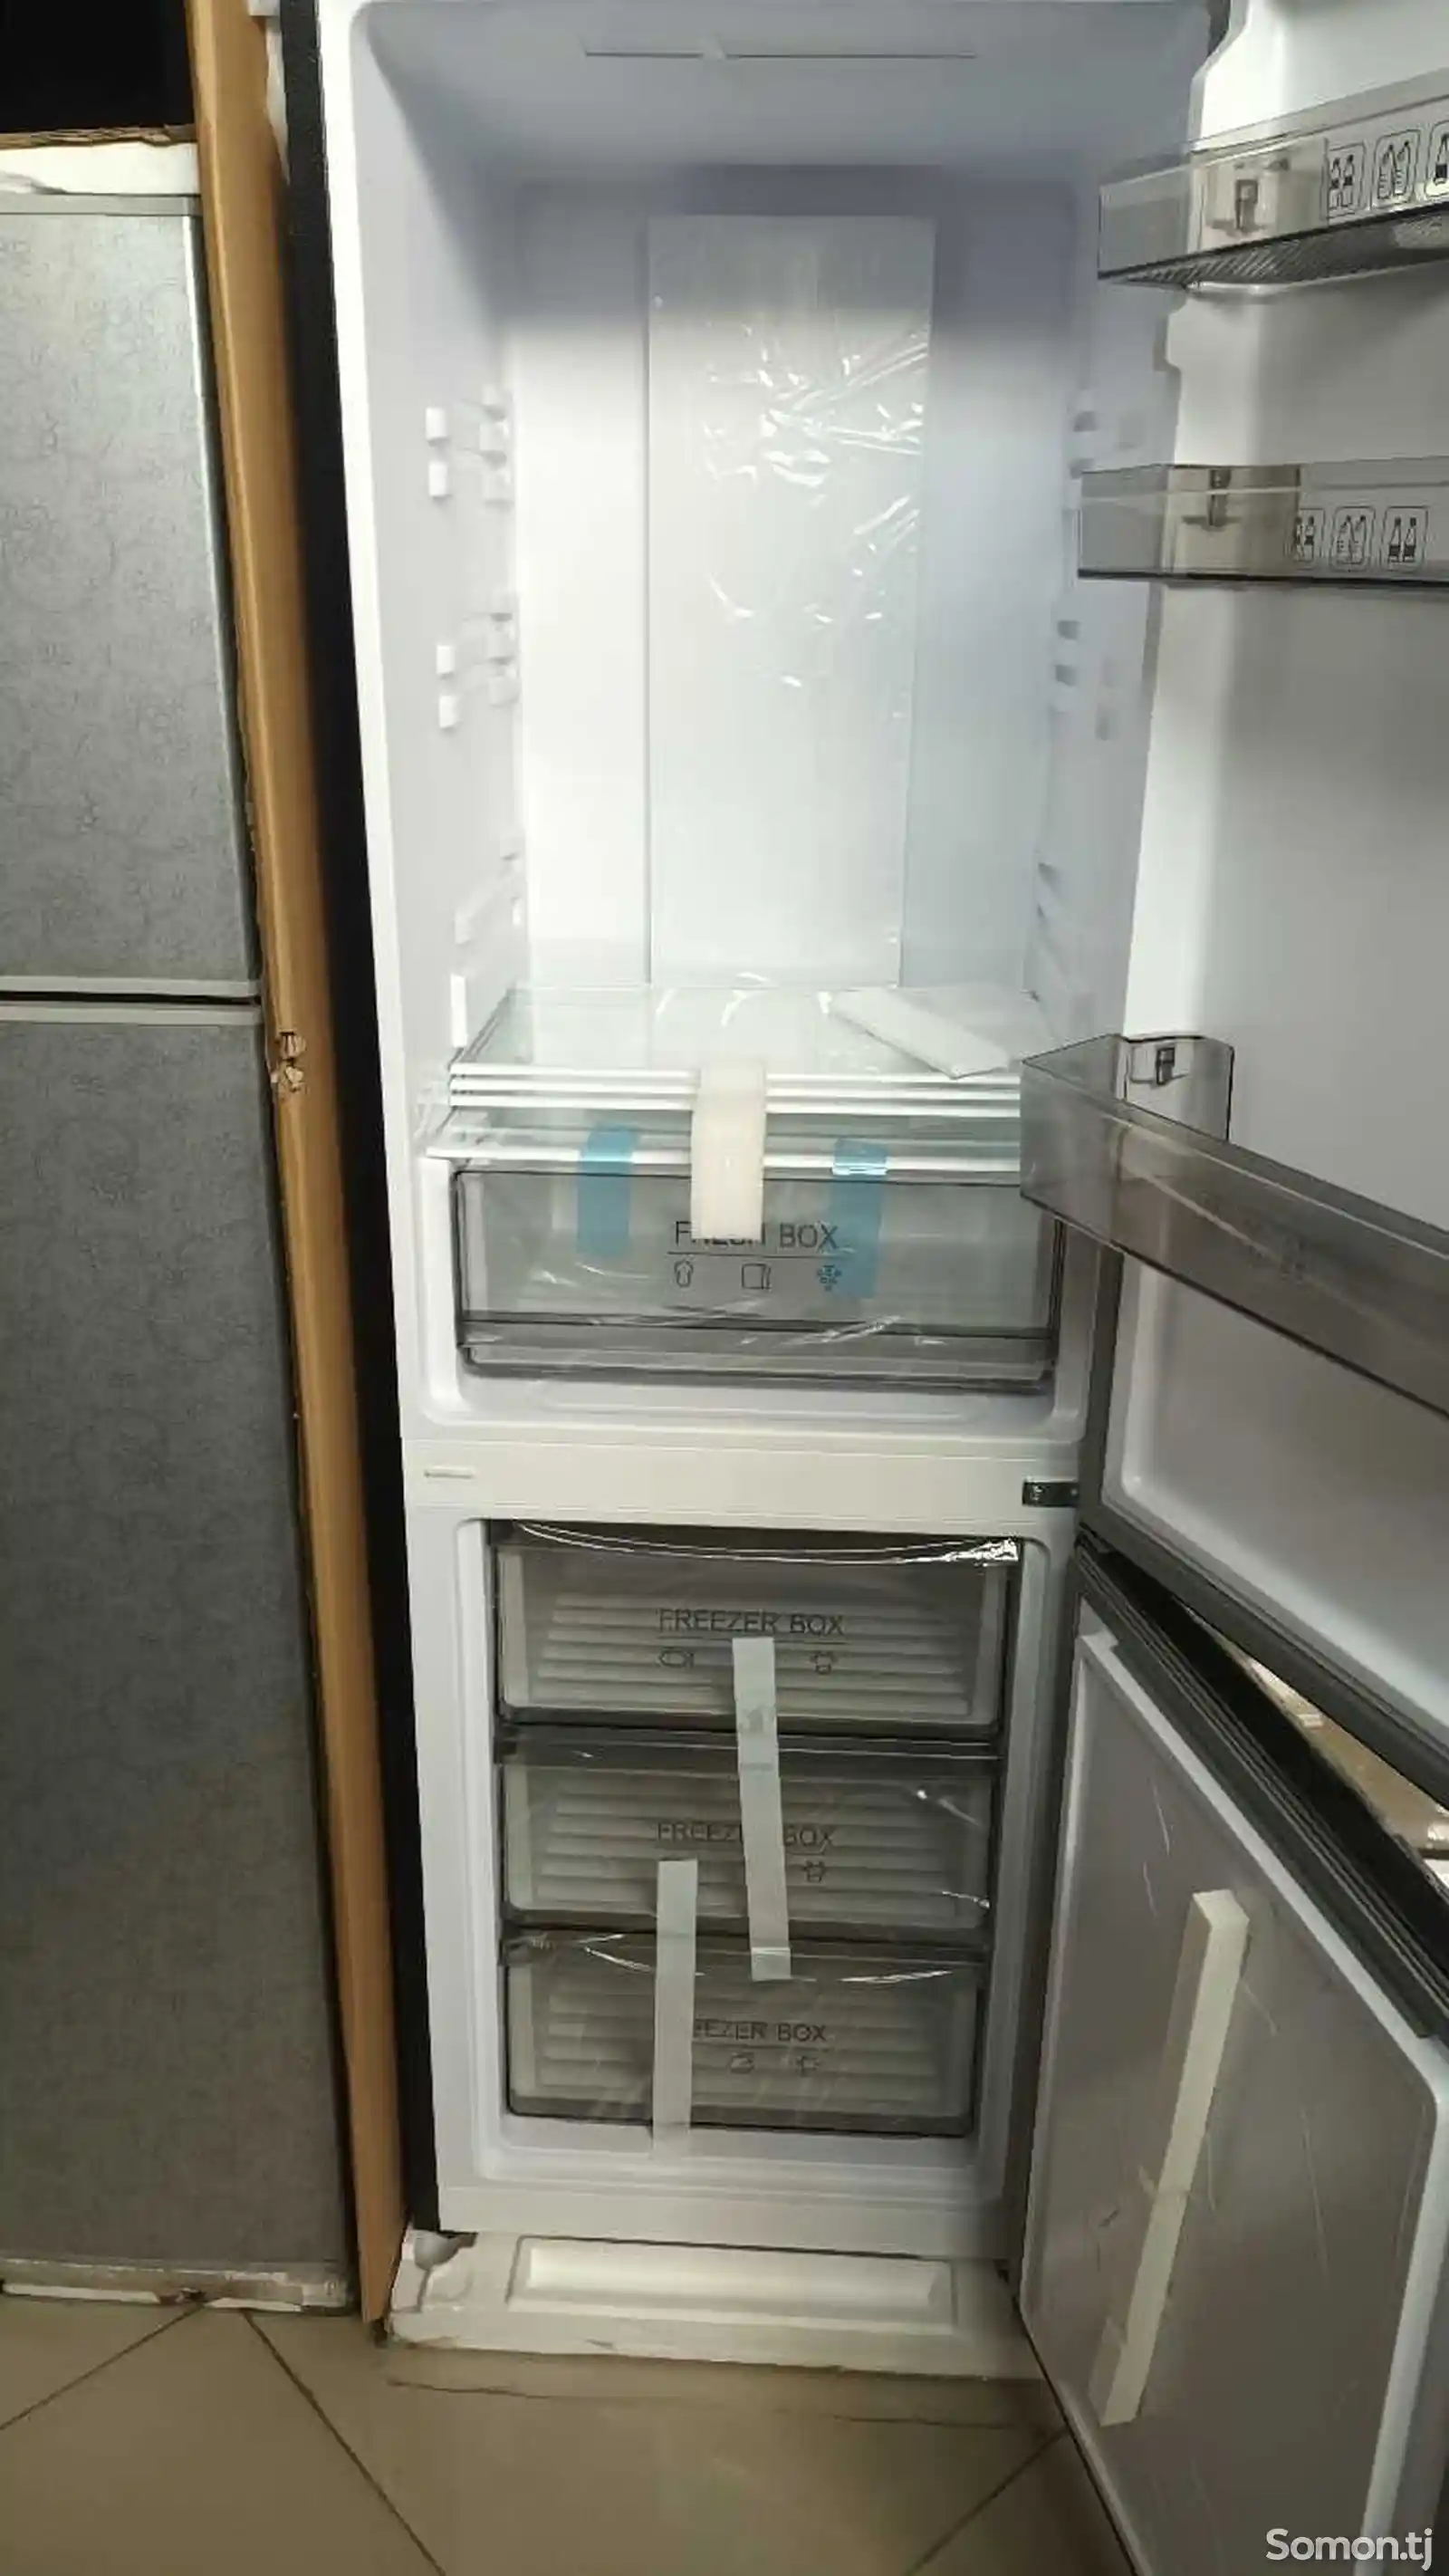 Холодильник EVRO-1